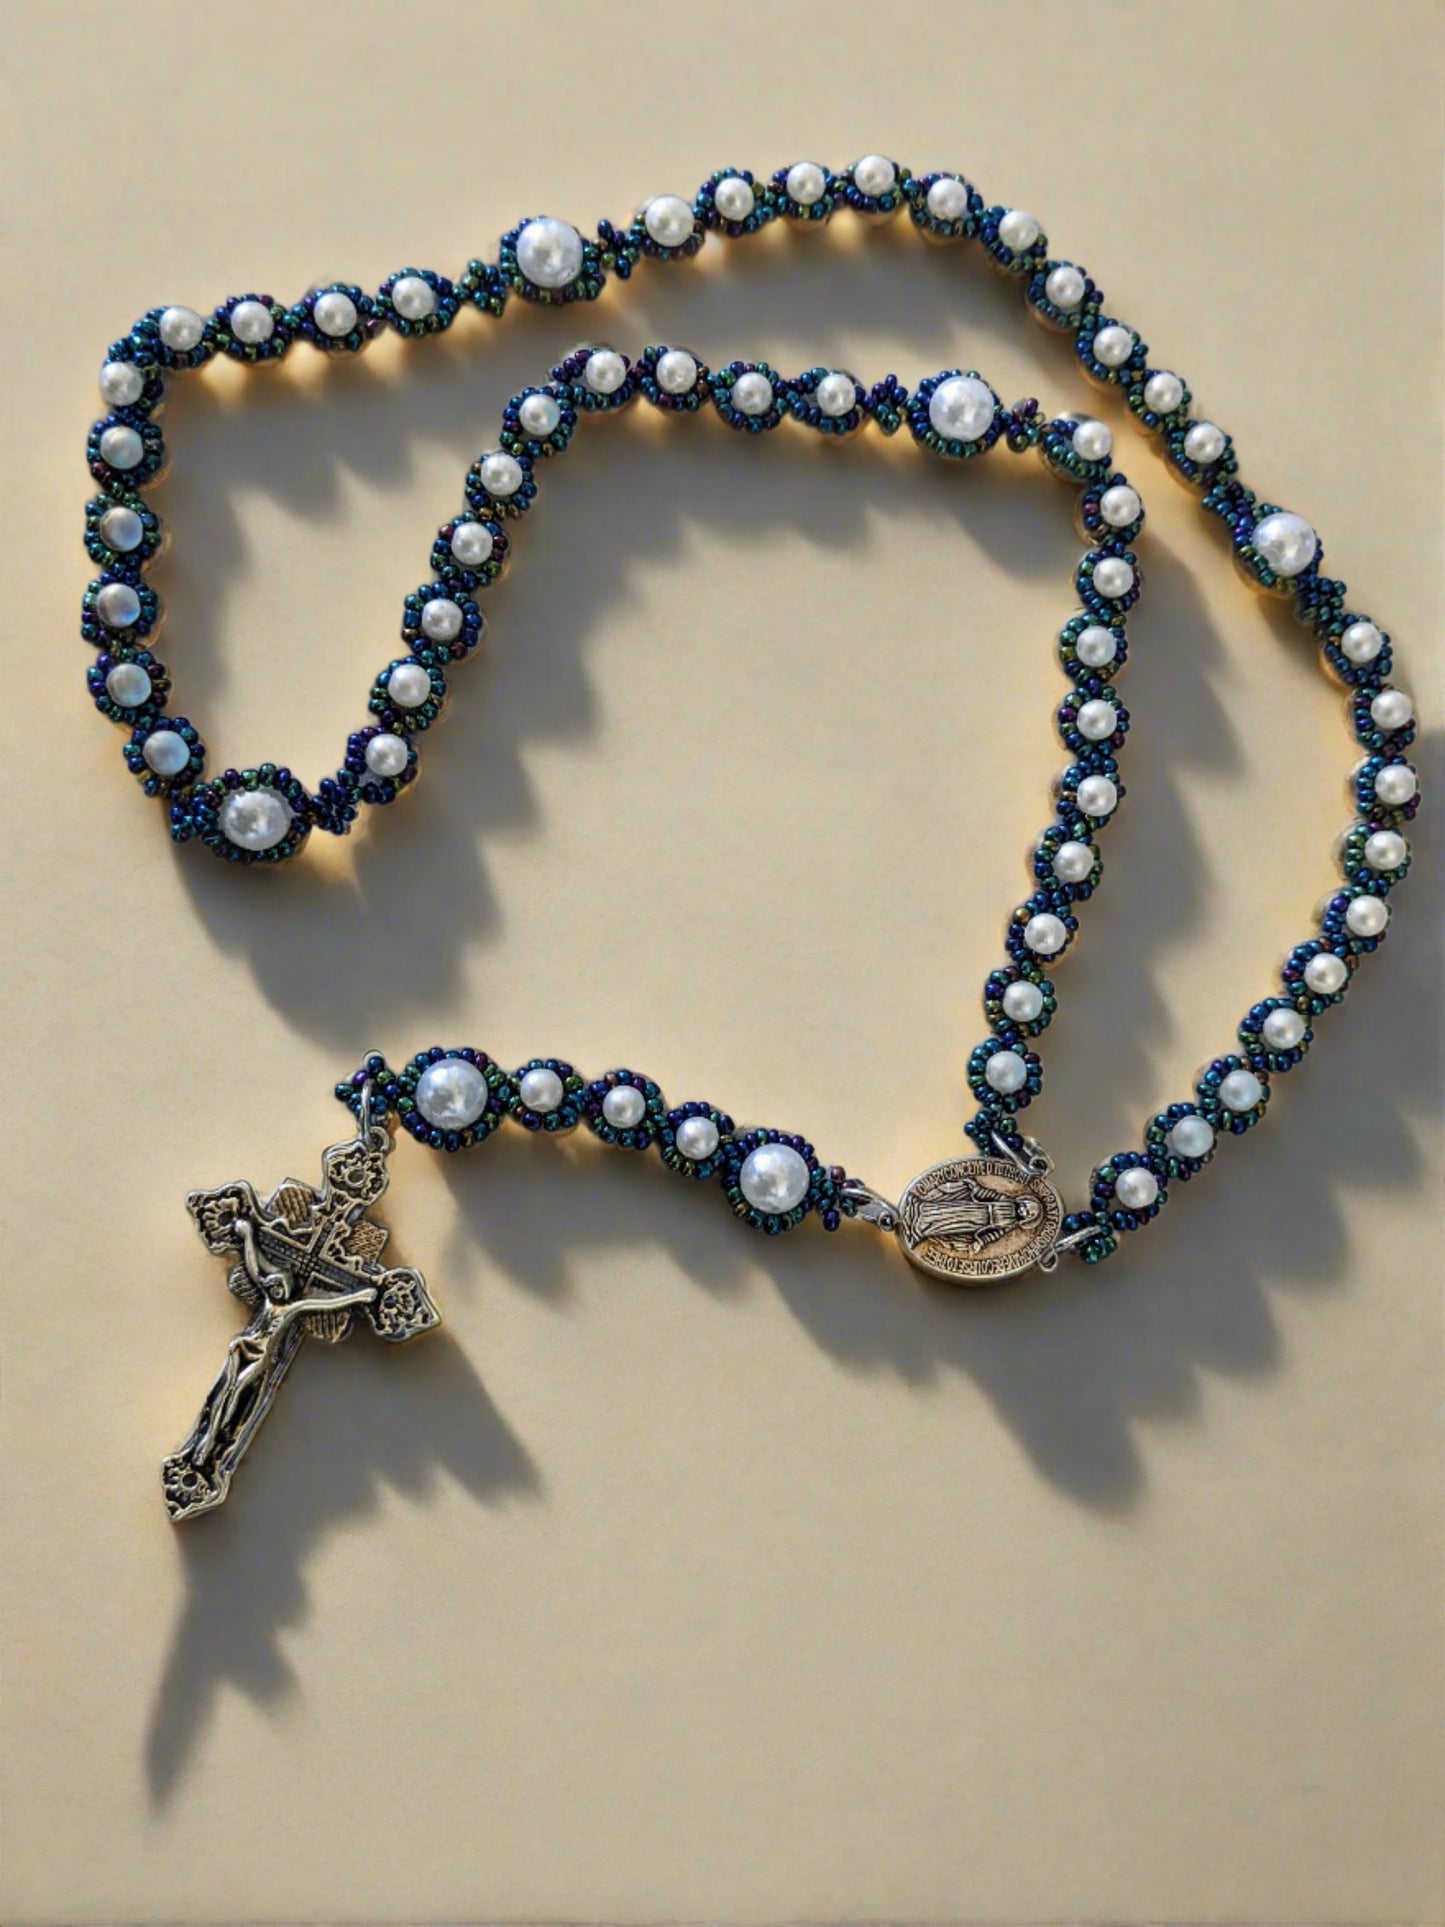 Intricate beaded rosary